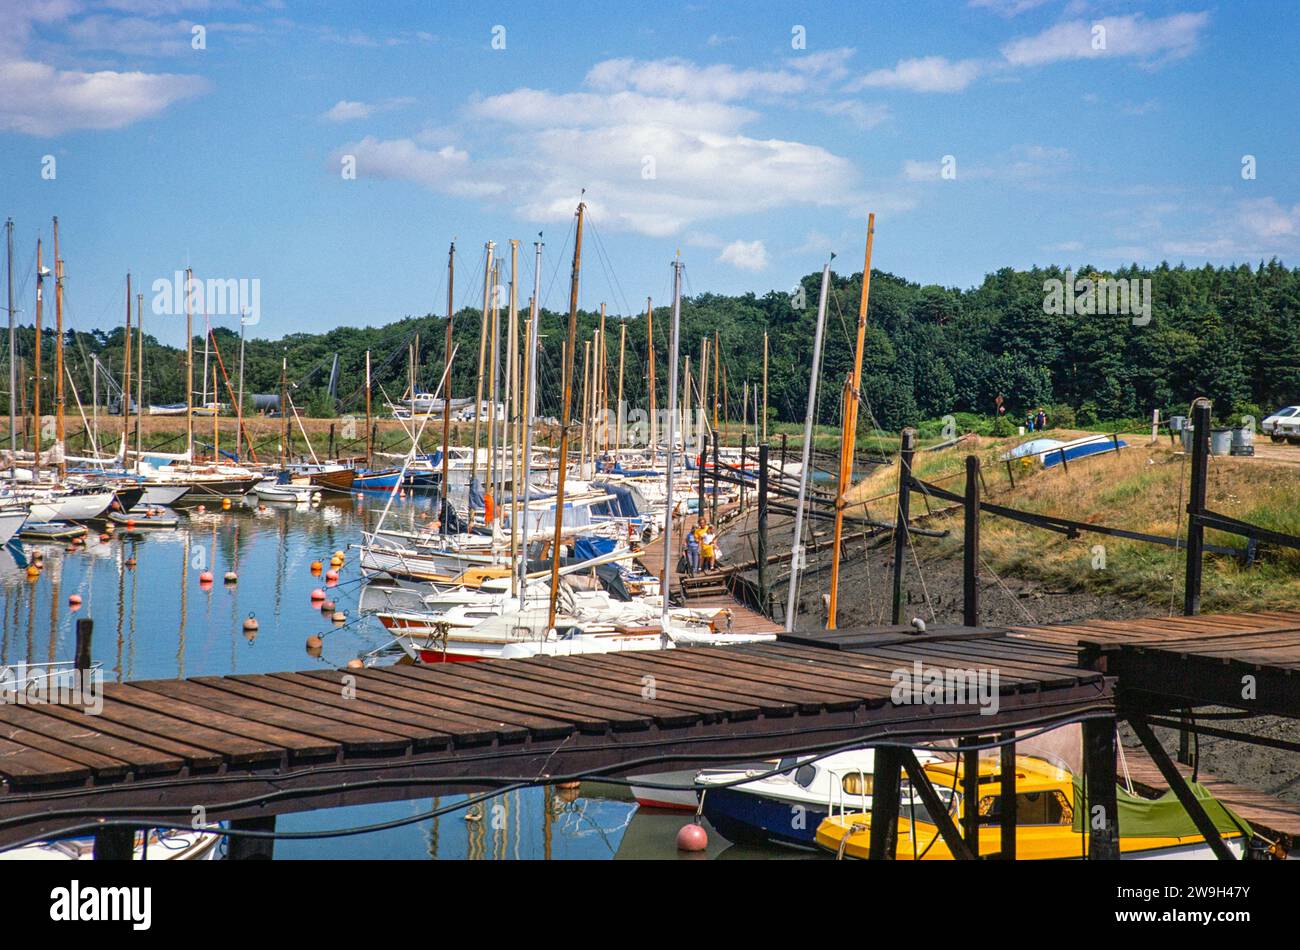 Boats in marina, Tidemill Yacht harbour,  Woodbridge, Suffolk, England,d UK July 1976 Stock Photo